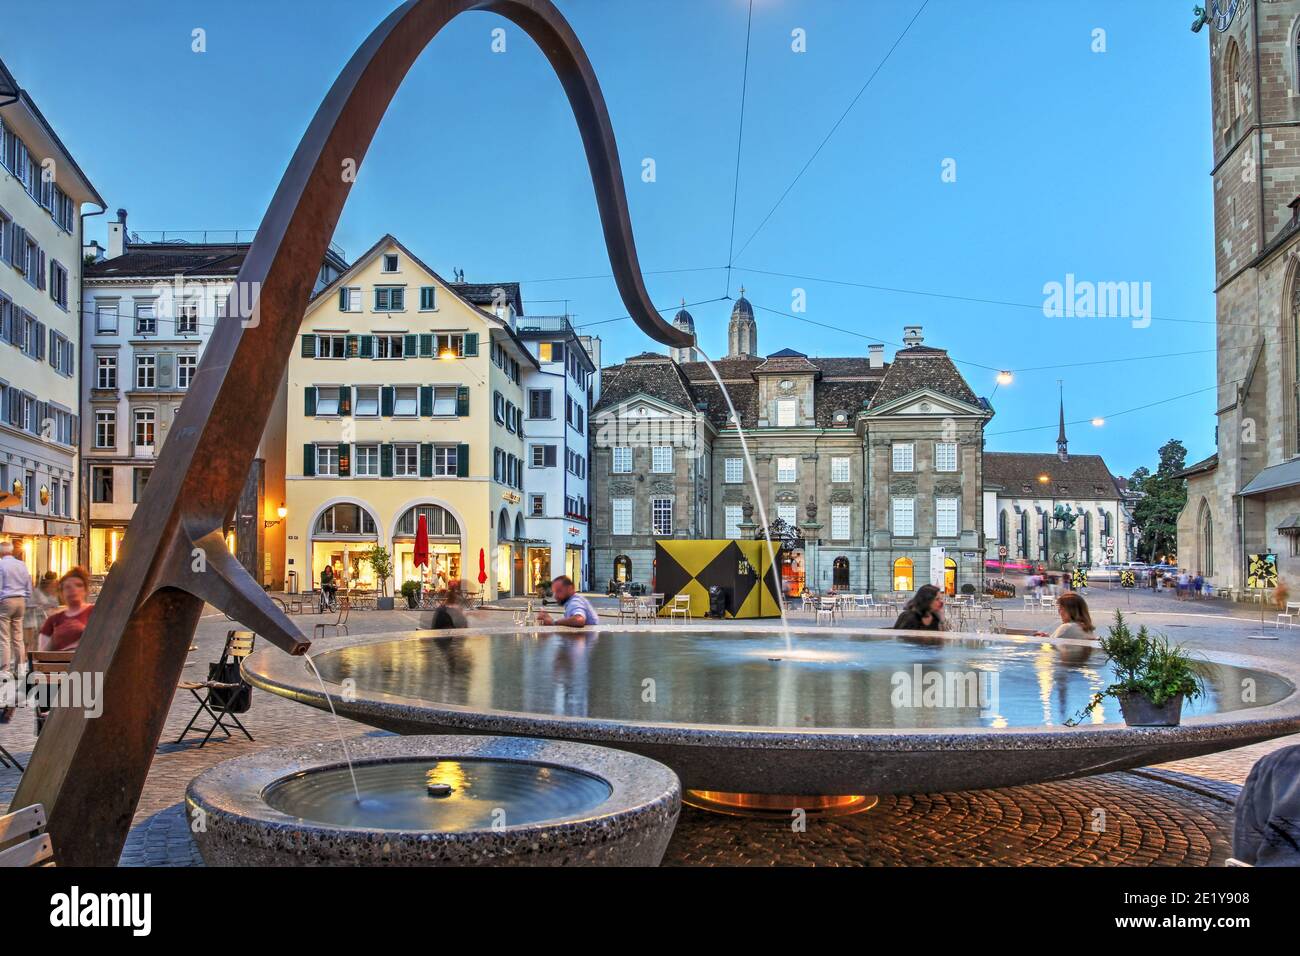 Scena notturna in Piazza Münsterhof nel quartiere Lindenhof di Altstadt (città vecchia) Zurigo, Svizzera. La piazza è stata ridisegnata nel 2016 per renderla piena di contenuti Foto Stock